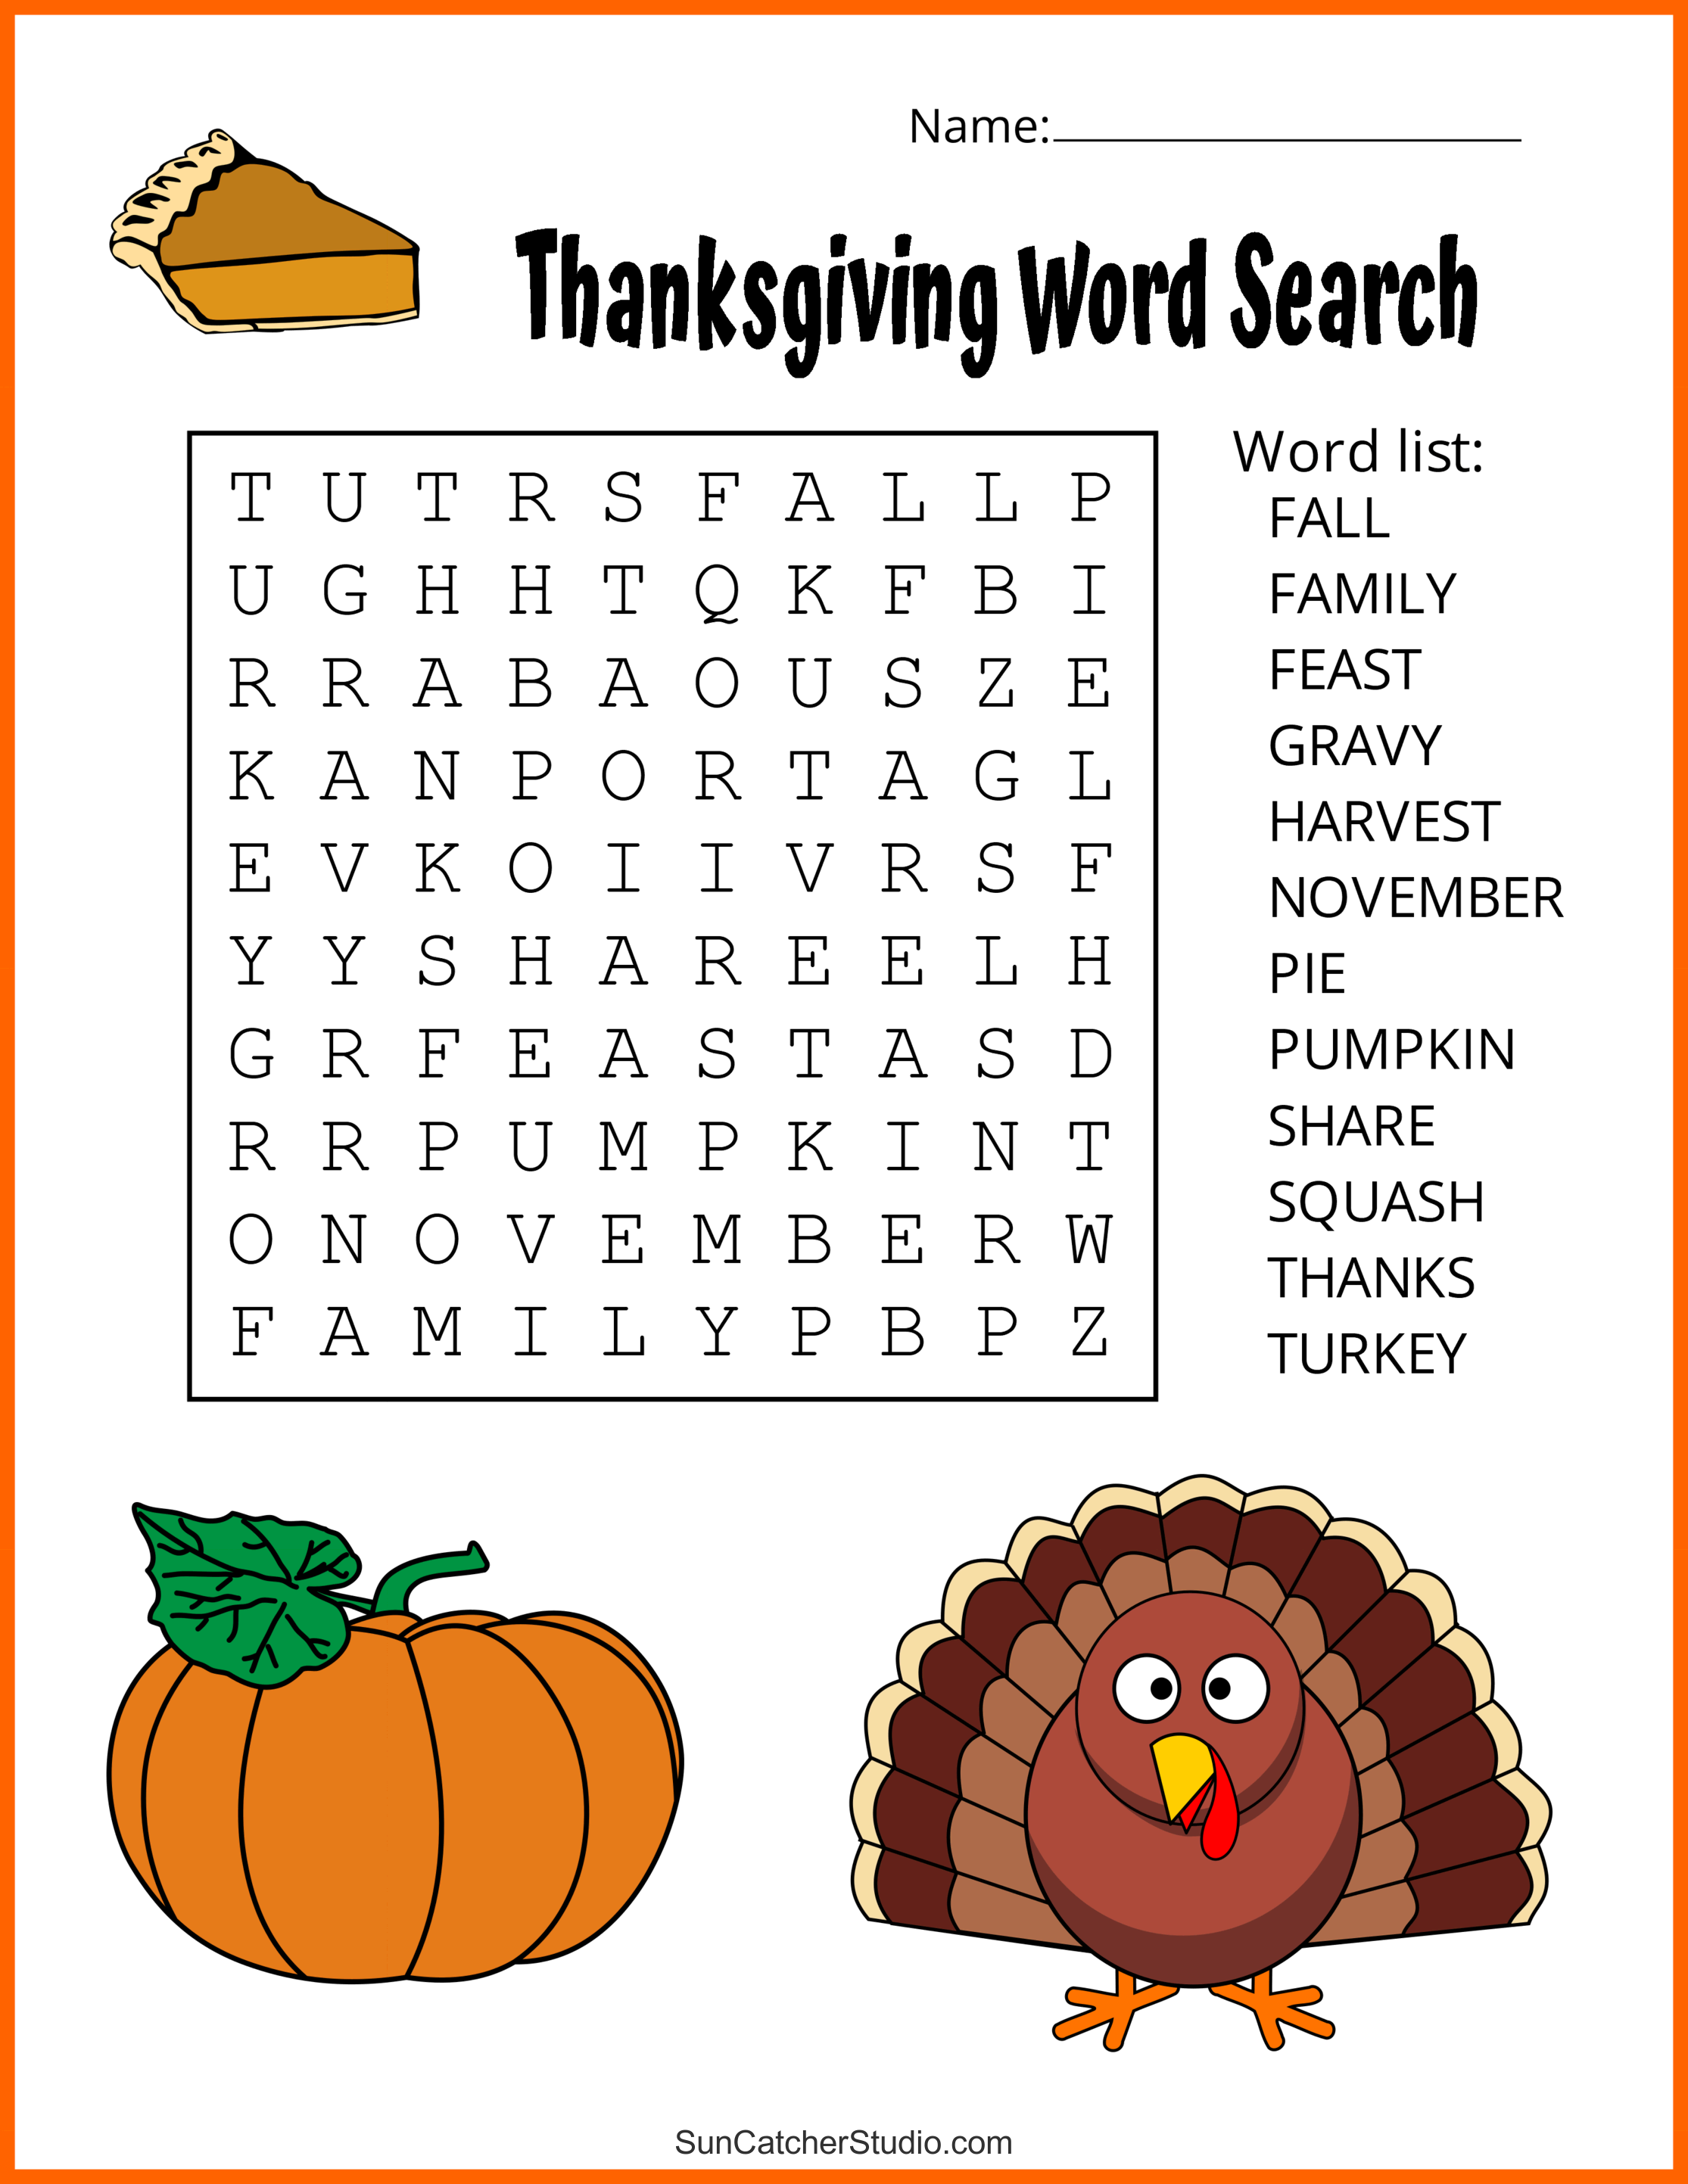 Thanksgiving Word Search Printable Free Printable Wor - vrogue.co